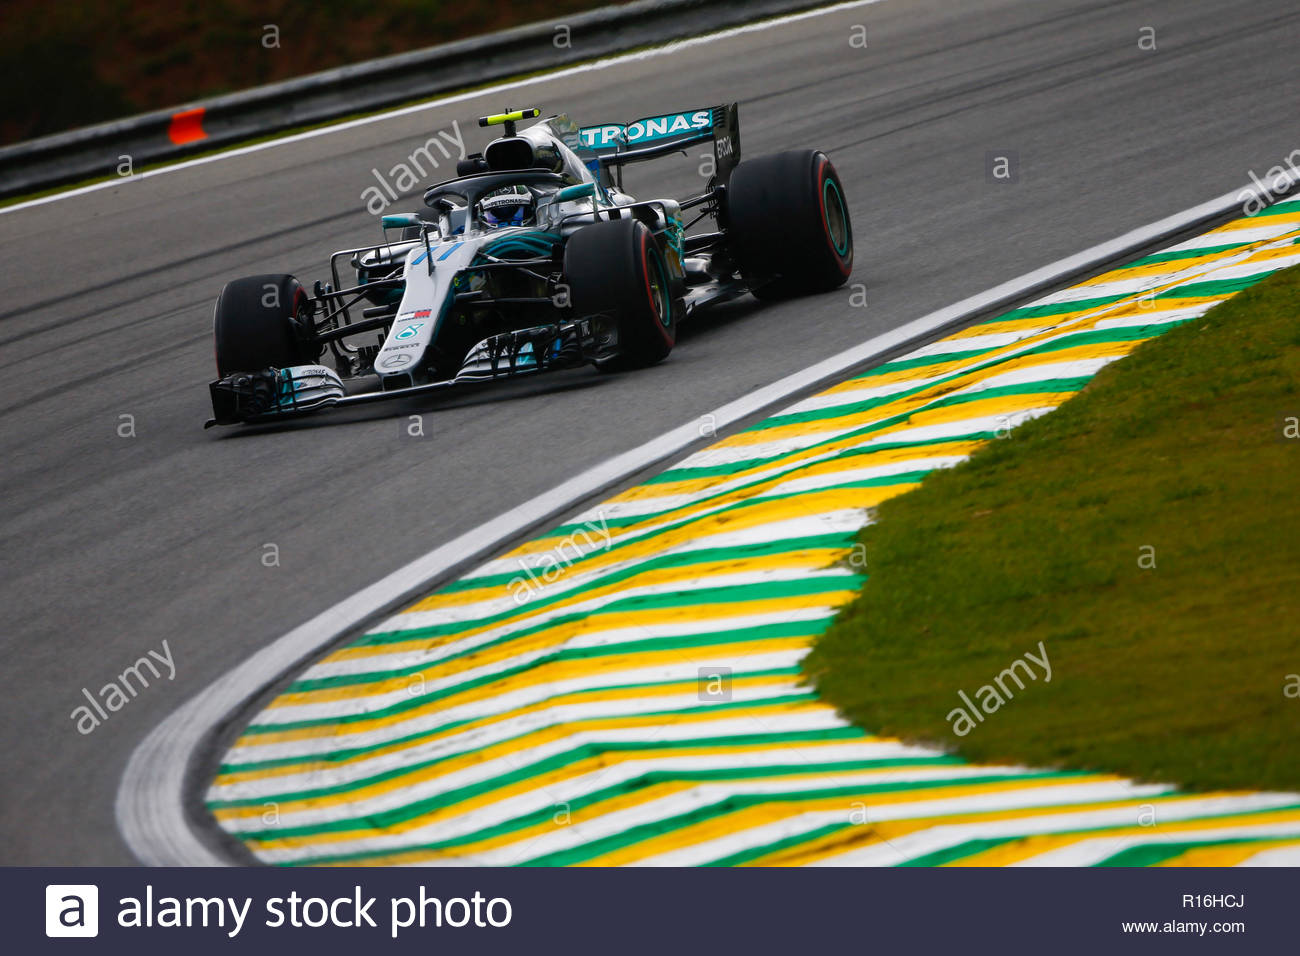 F1 brazil 2018